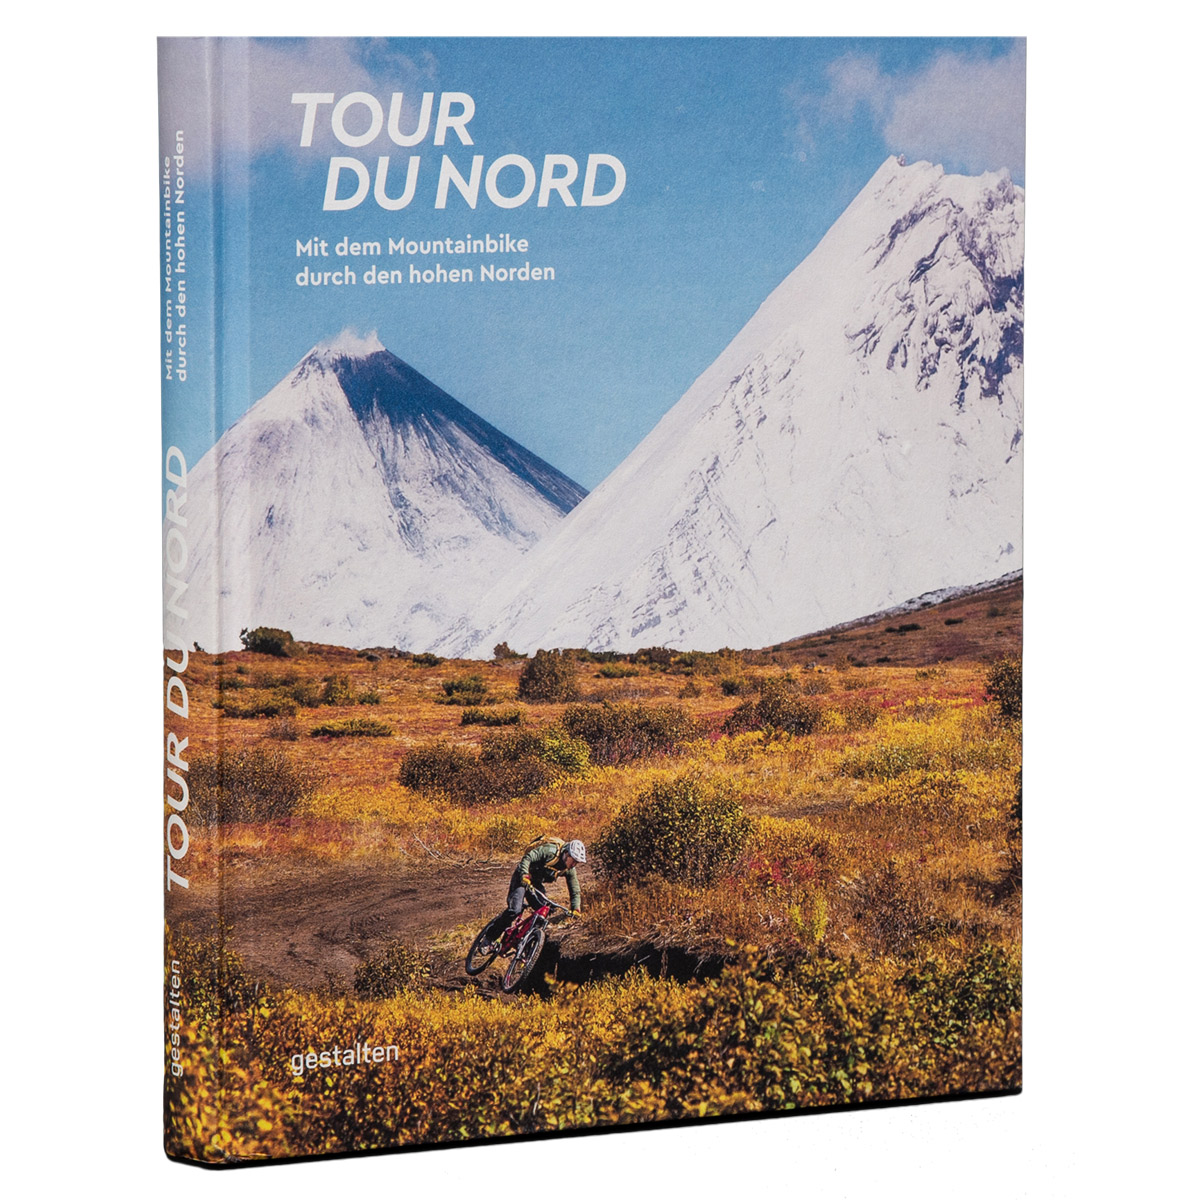 Foto de Tobias Woggon - Tour du Nord: Mit dem Mountainbike durch den hohen Norden (alemán) - tapa dura